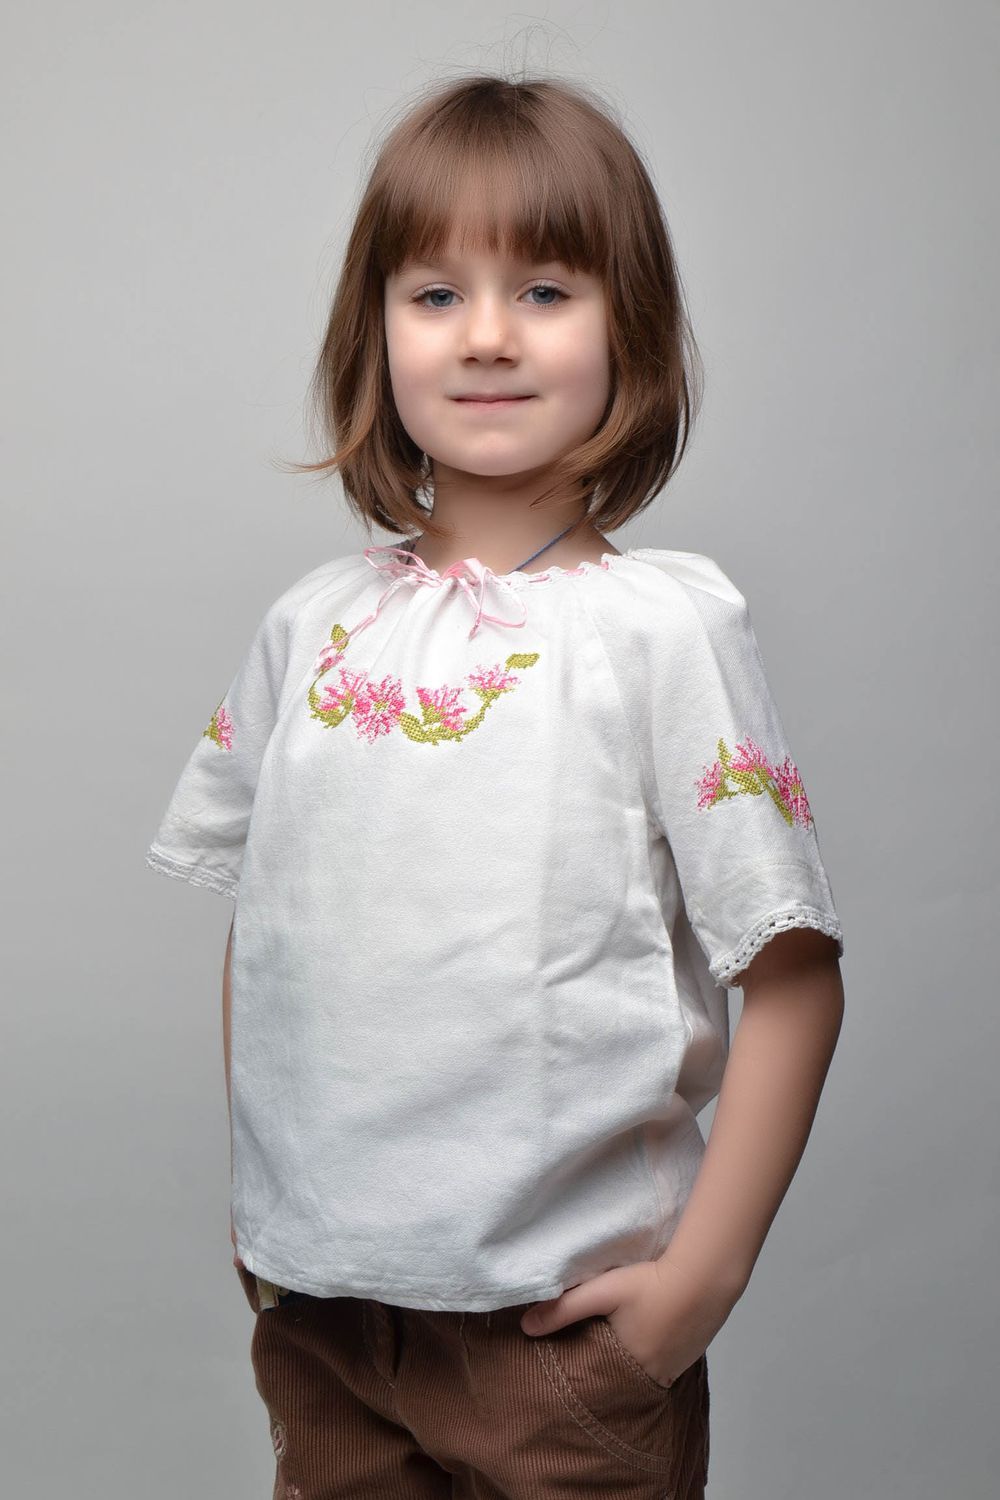 Children's cross stitch embroidered shirt photo 1